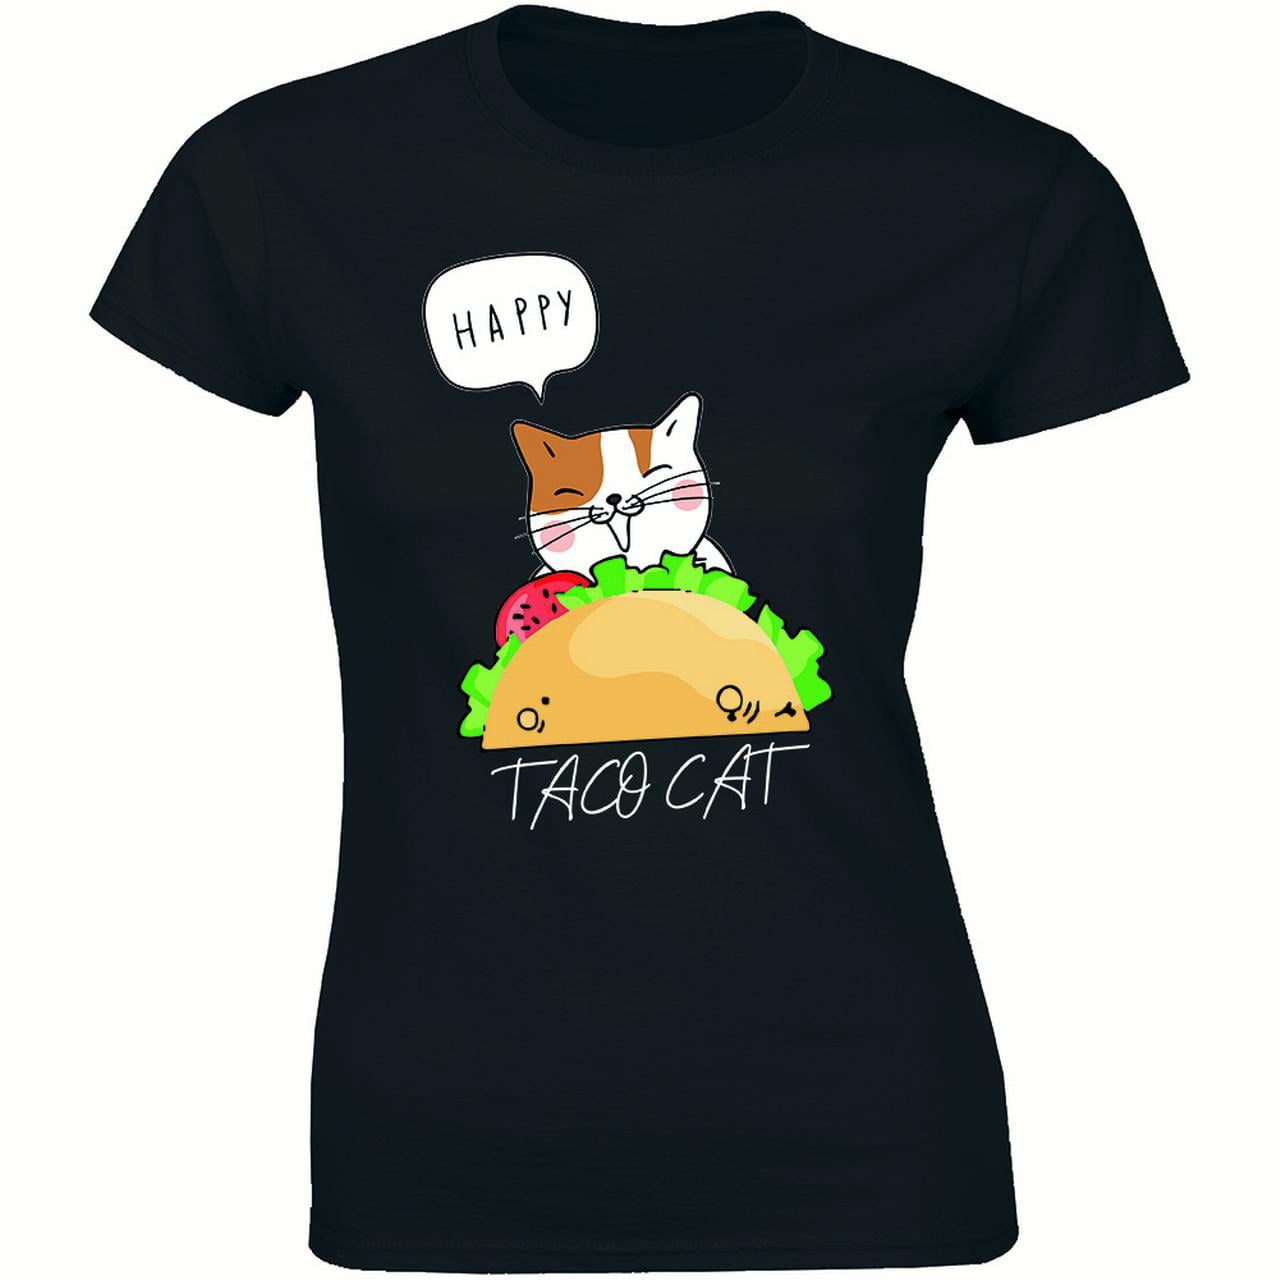 Tacocat Either Way T-Shirt Funny Womens Cut Shirt S-XL 